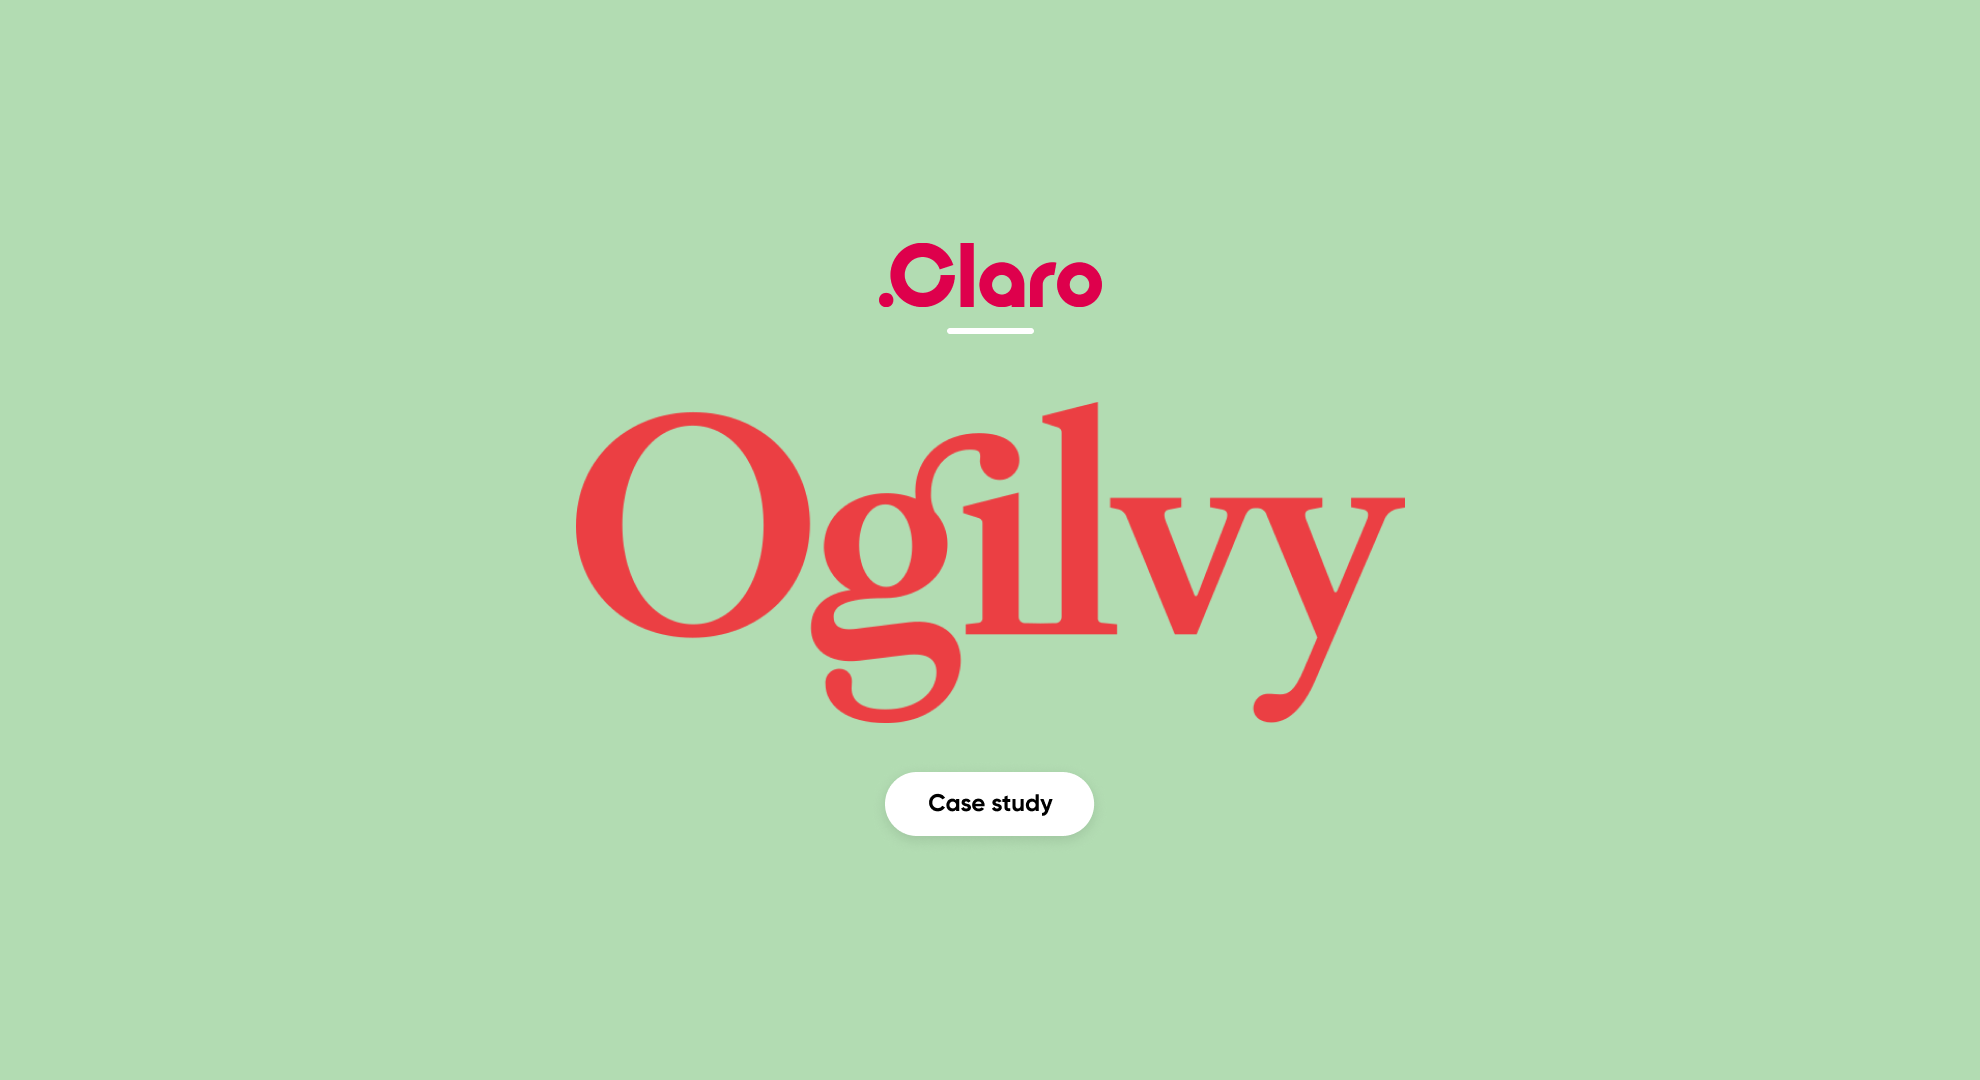 Ogilvy case study blog post featured image 